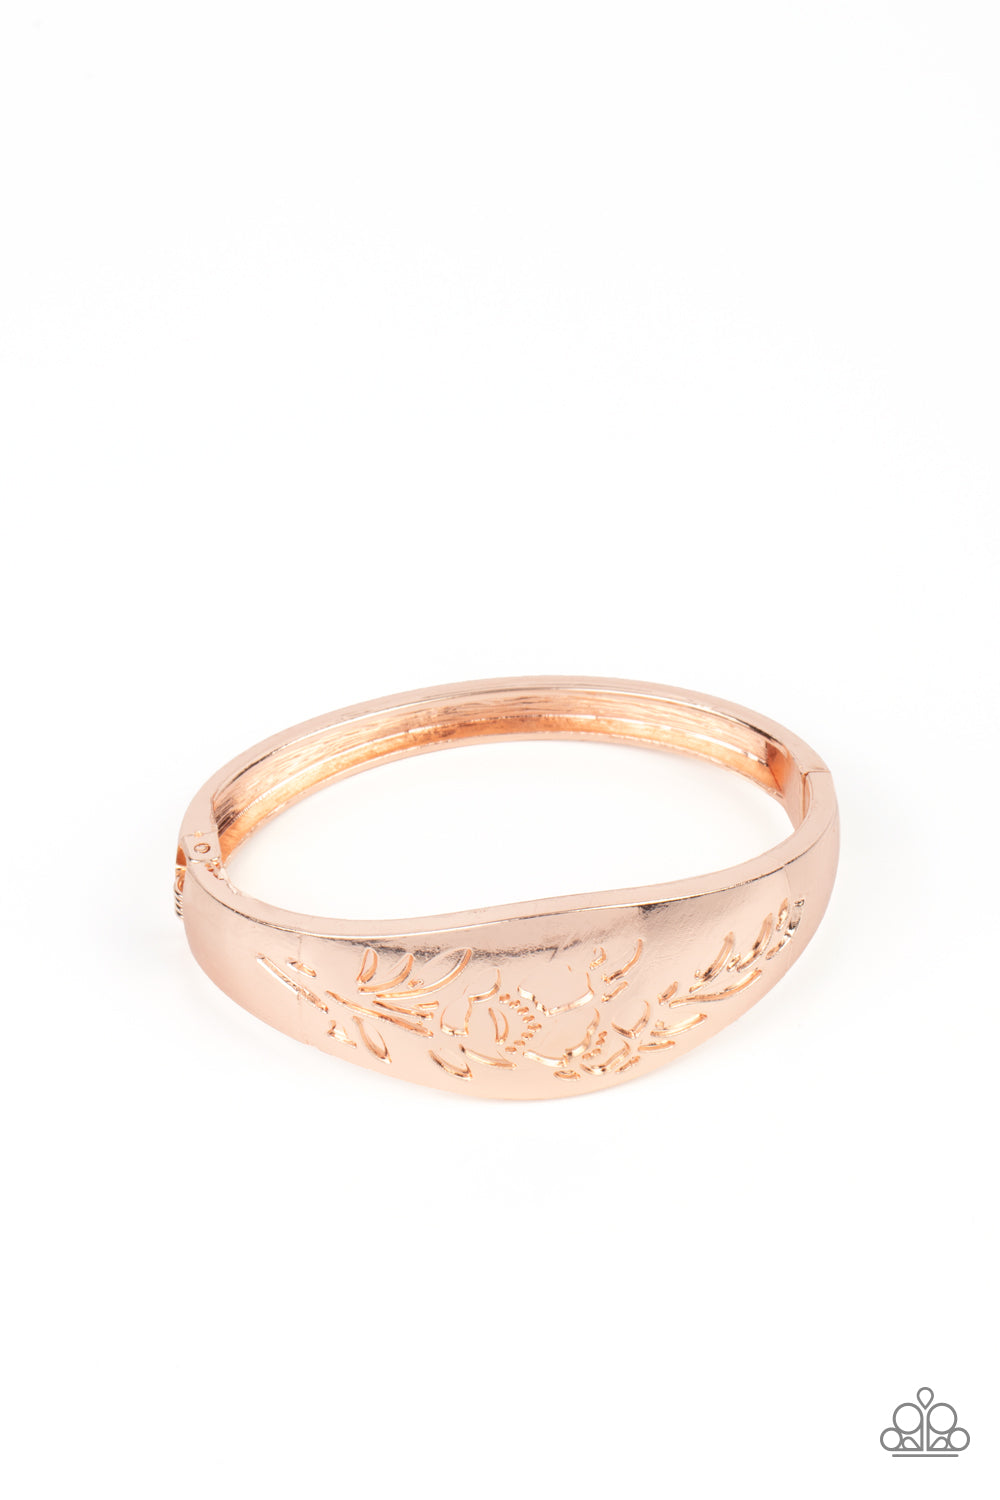 Fond of Florals - Rose Gold Bracelet freeshipping - JewLz4u Gemstone Gallery